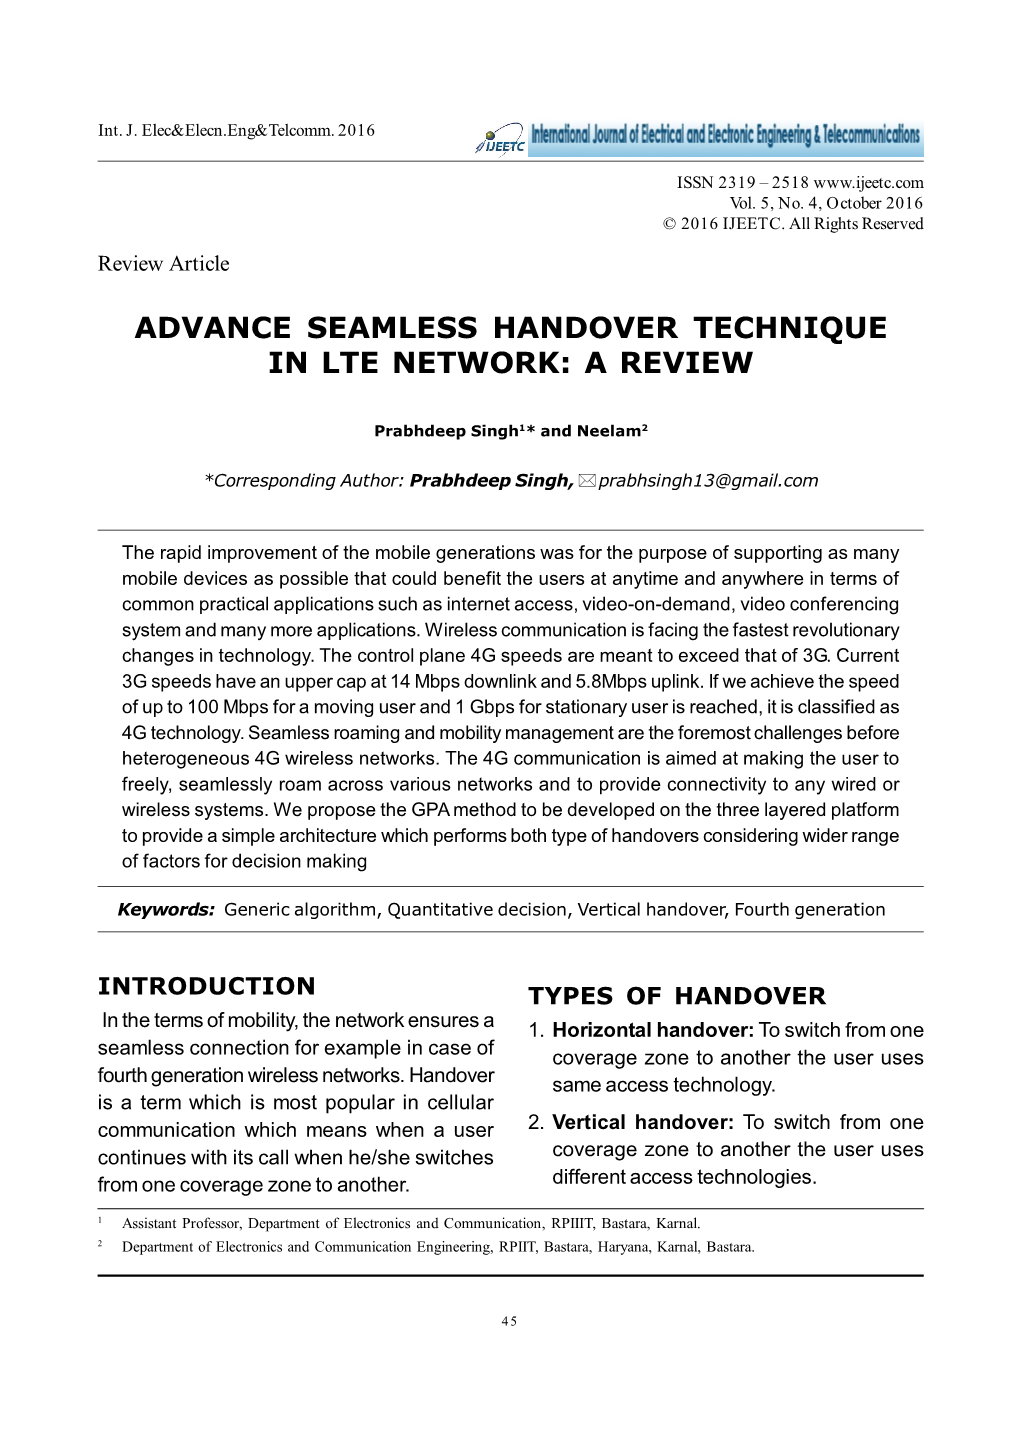 Advance Seamless Handover Technique in Lte Network: a Review